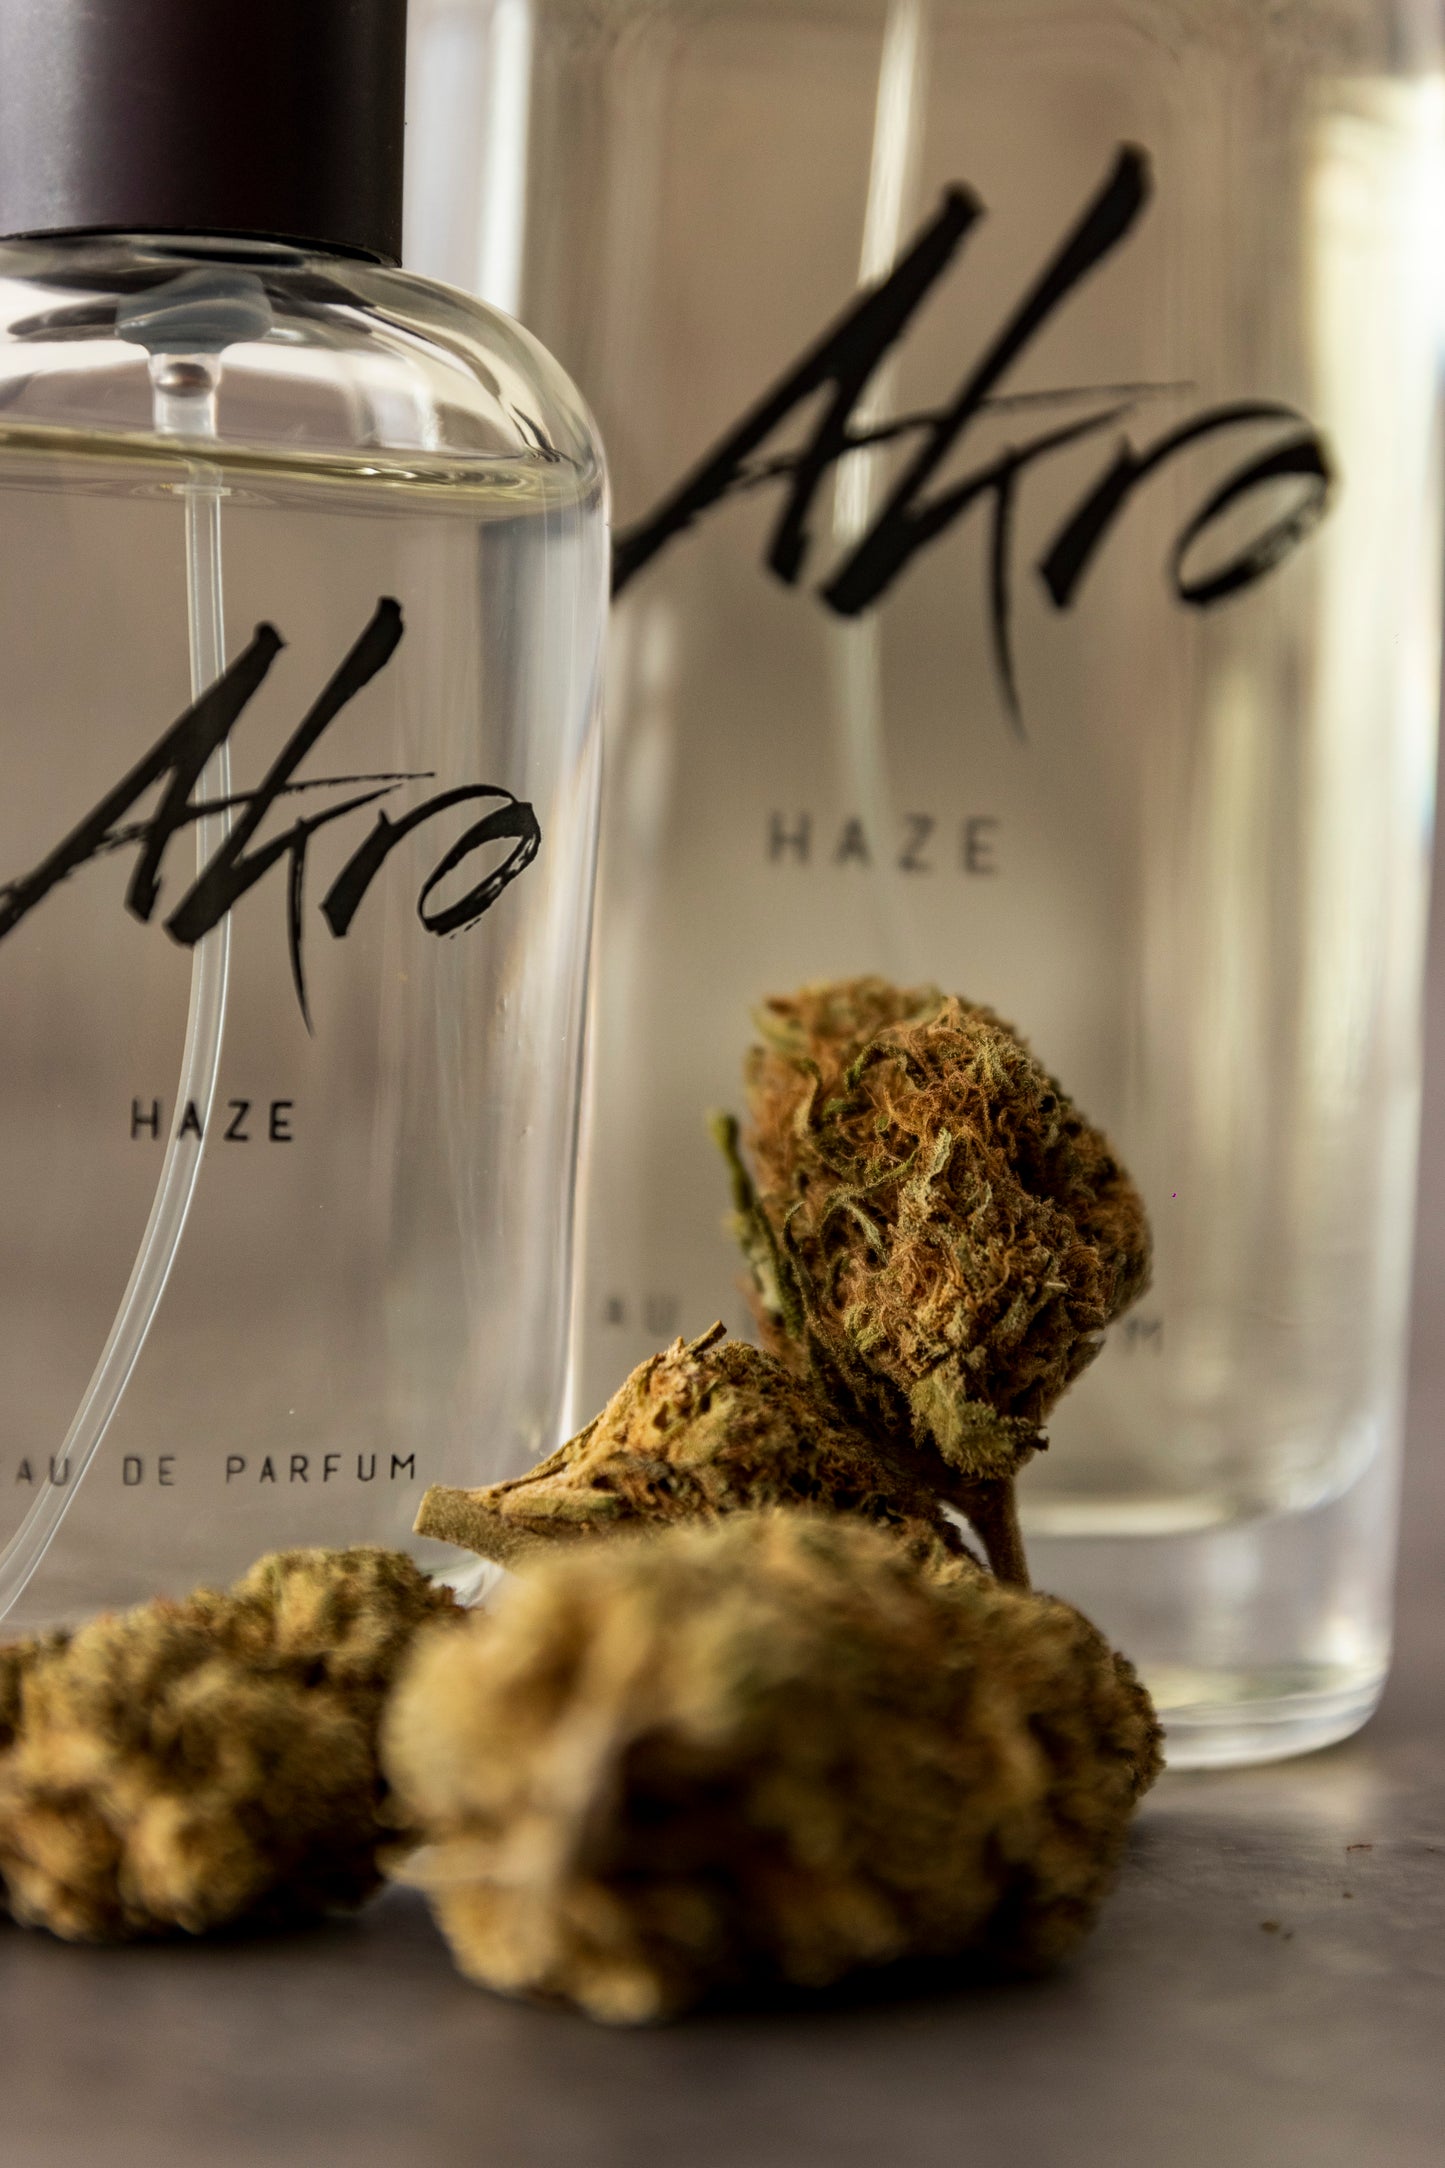 Haze EDP Akro Fragrances